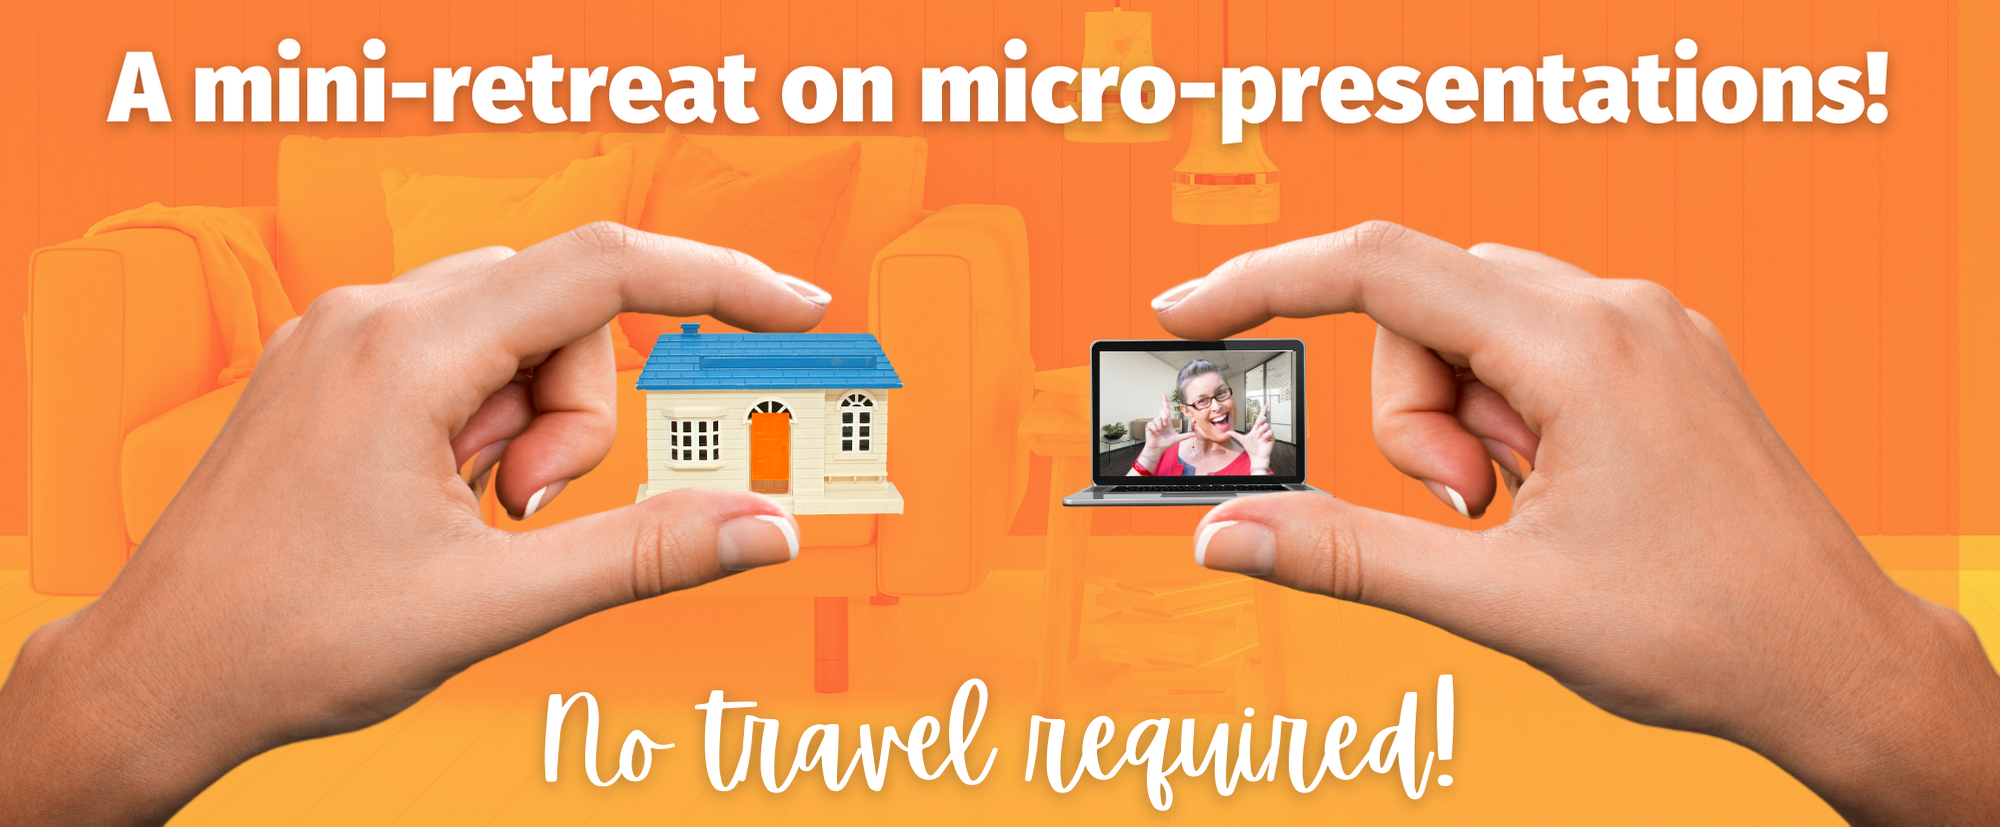 A mini-retreat on micro-presentations! No travel required!